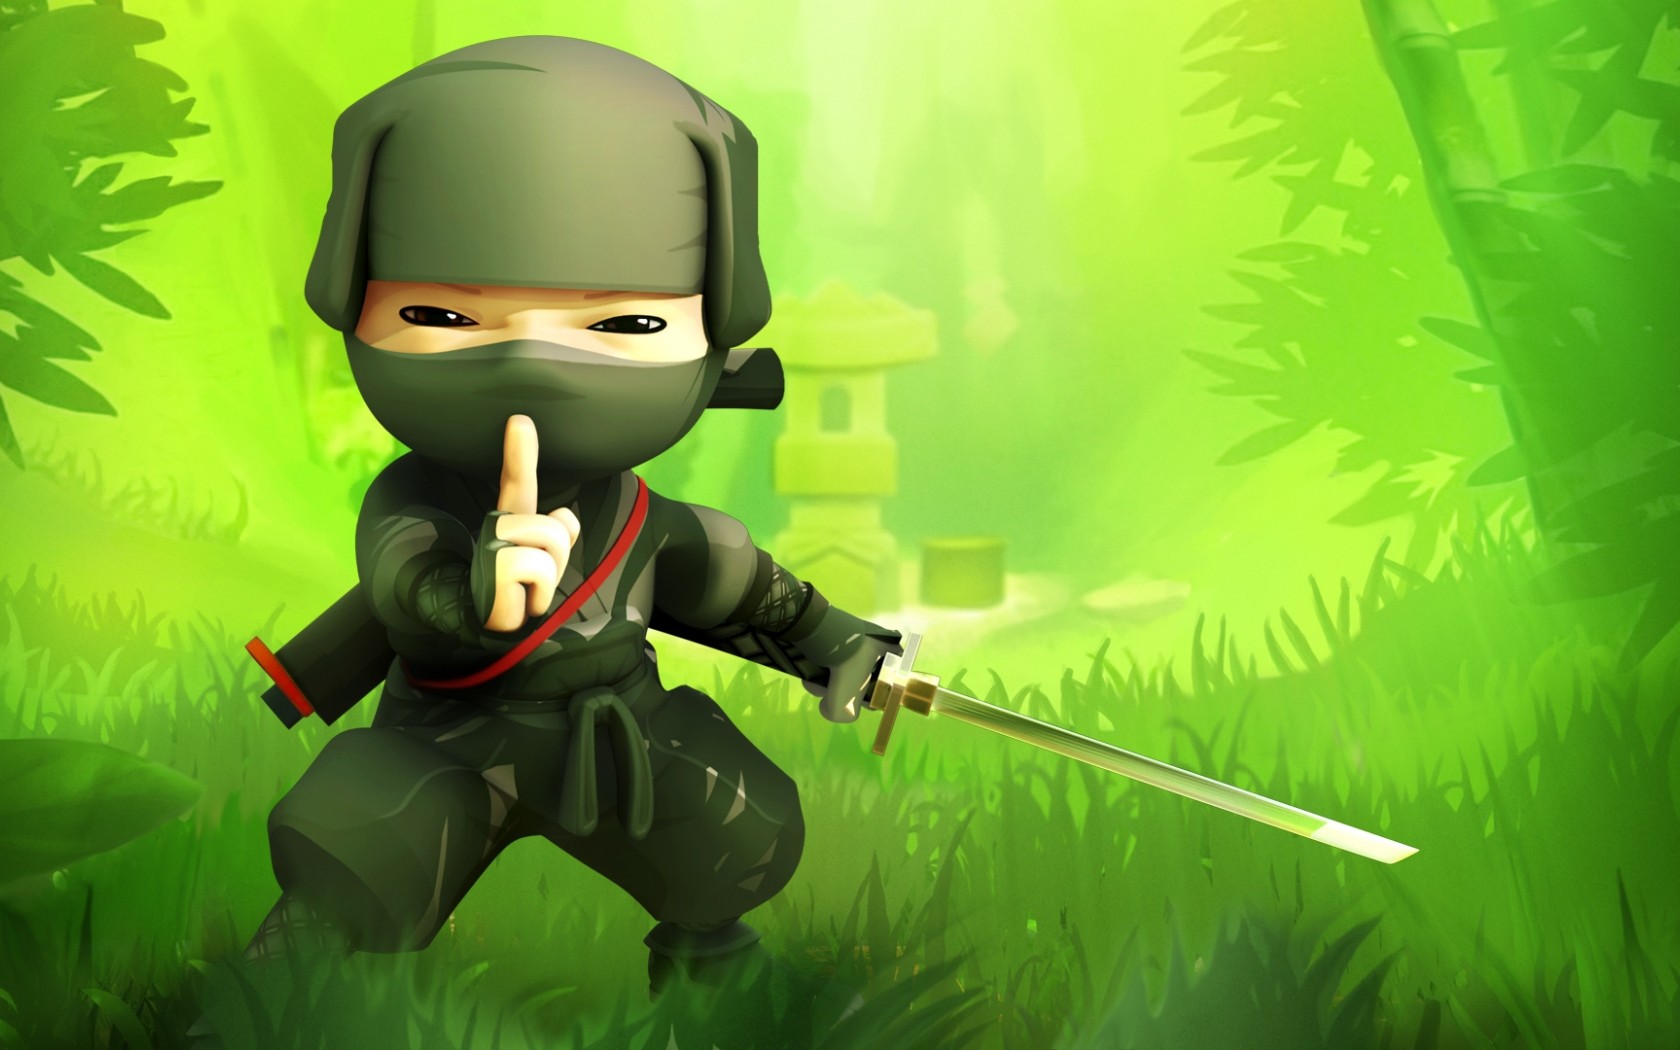 Ninja Cartoon Wallpaper for Desktop and Mobiles